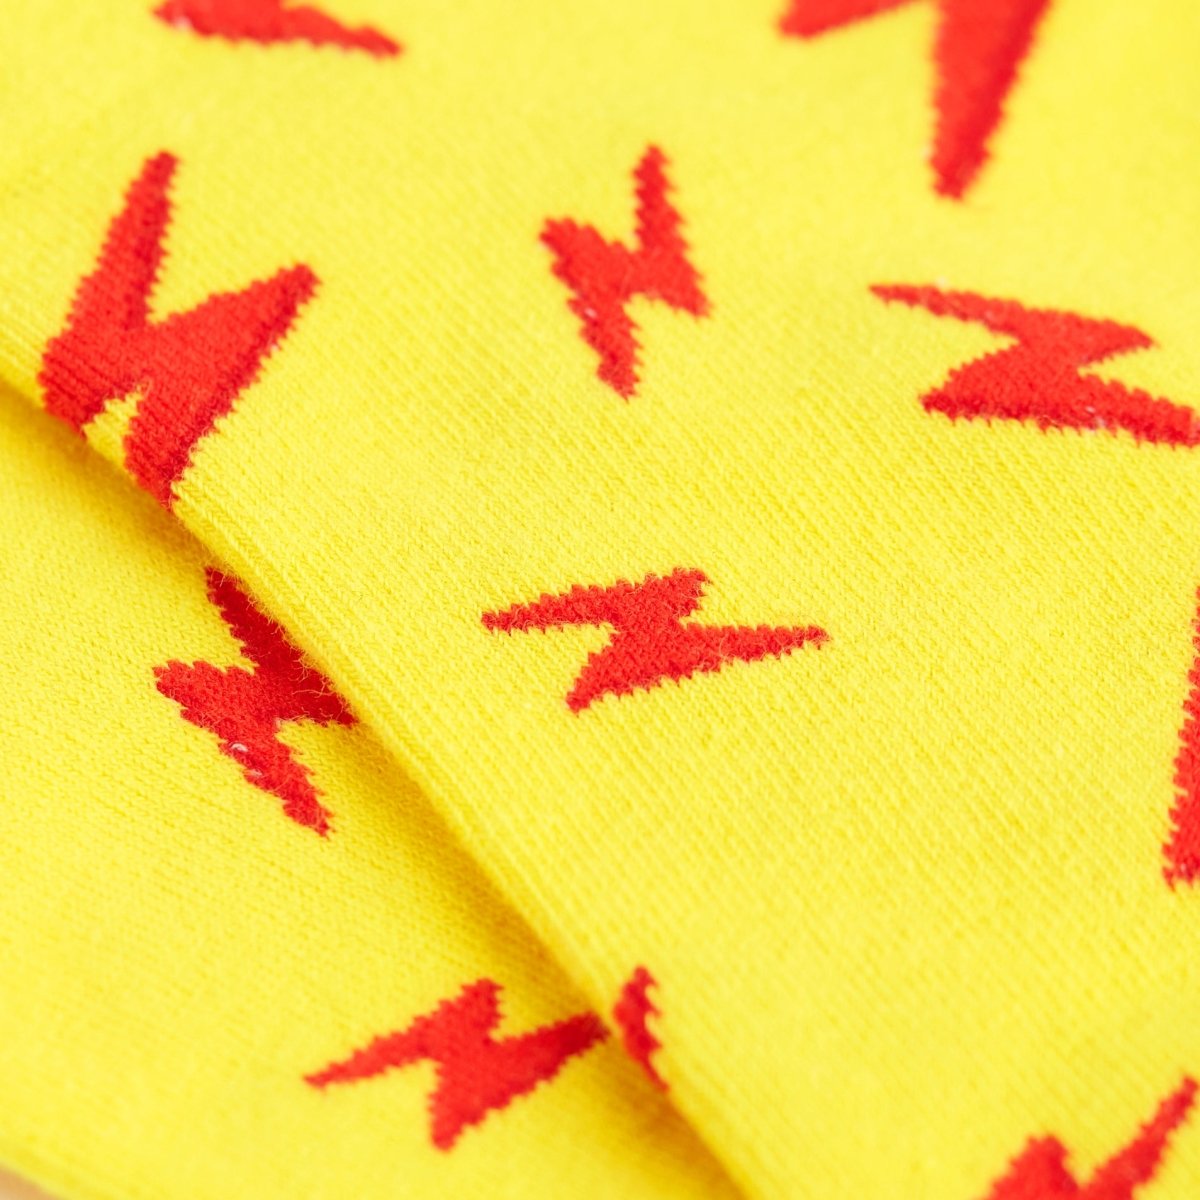 Lightning Bolt Unisex Crew Socks - MANBUNS Underwear & Socks Free Shipping